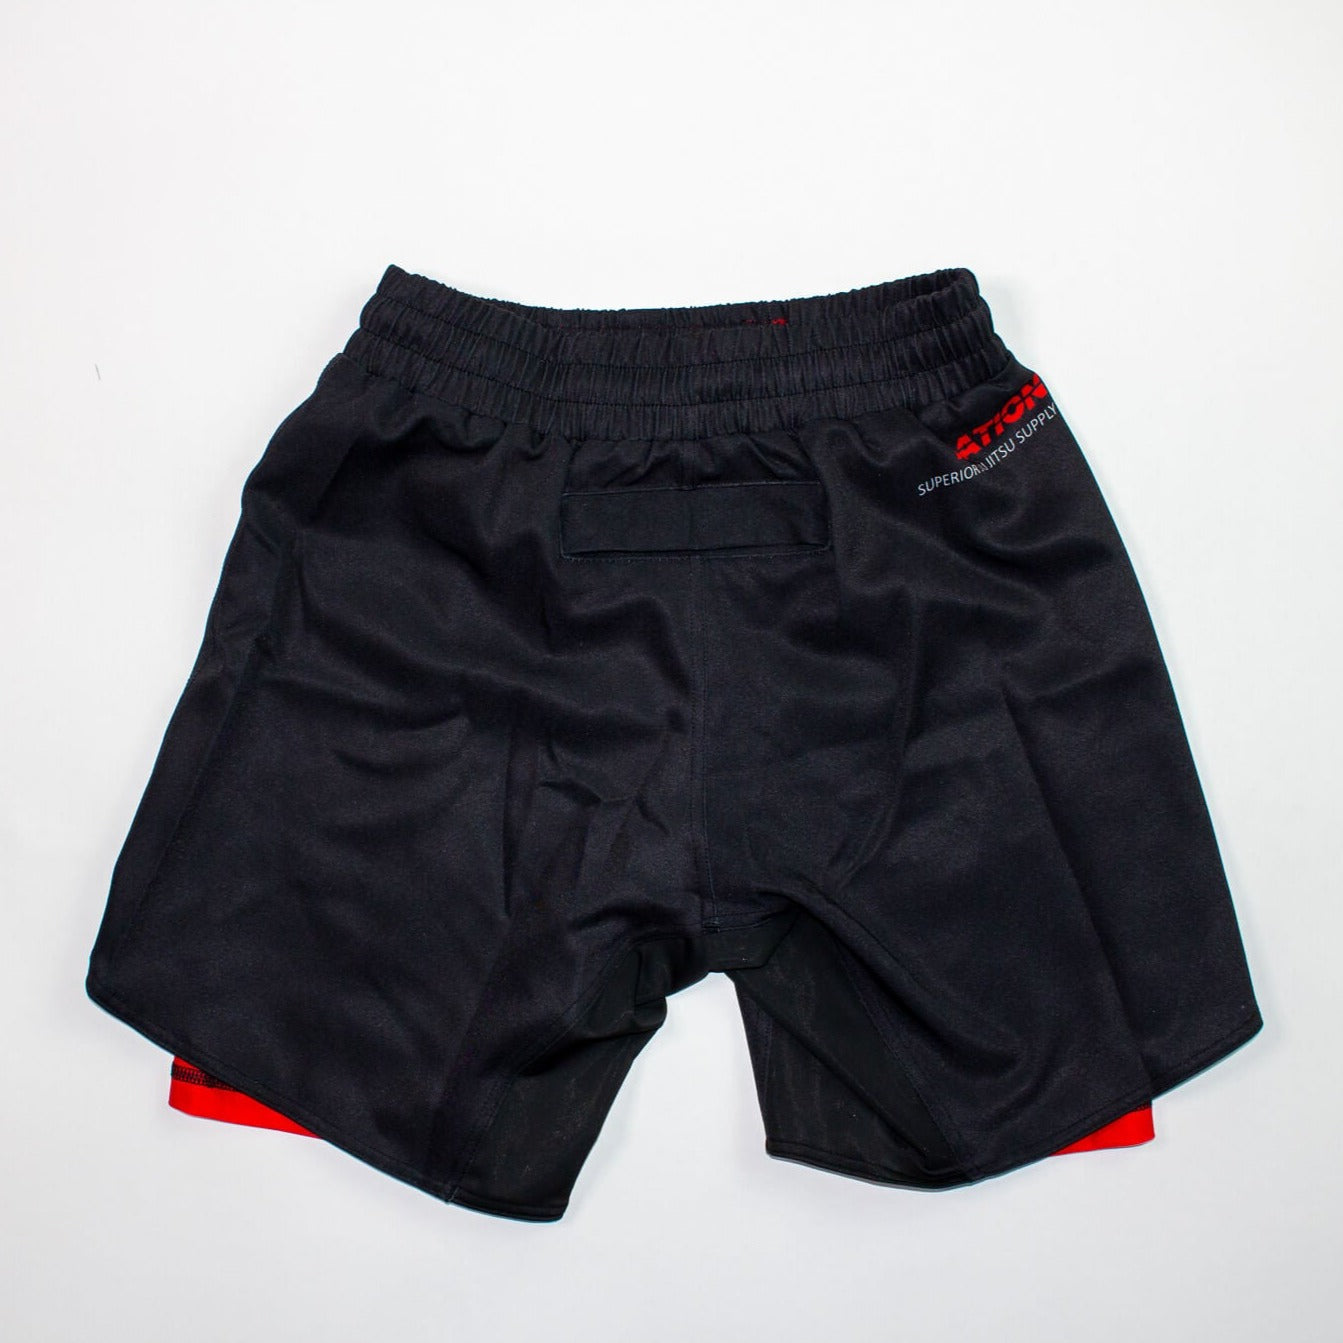 grappling shorts for bjj and nogi jiu jitsu